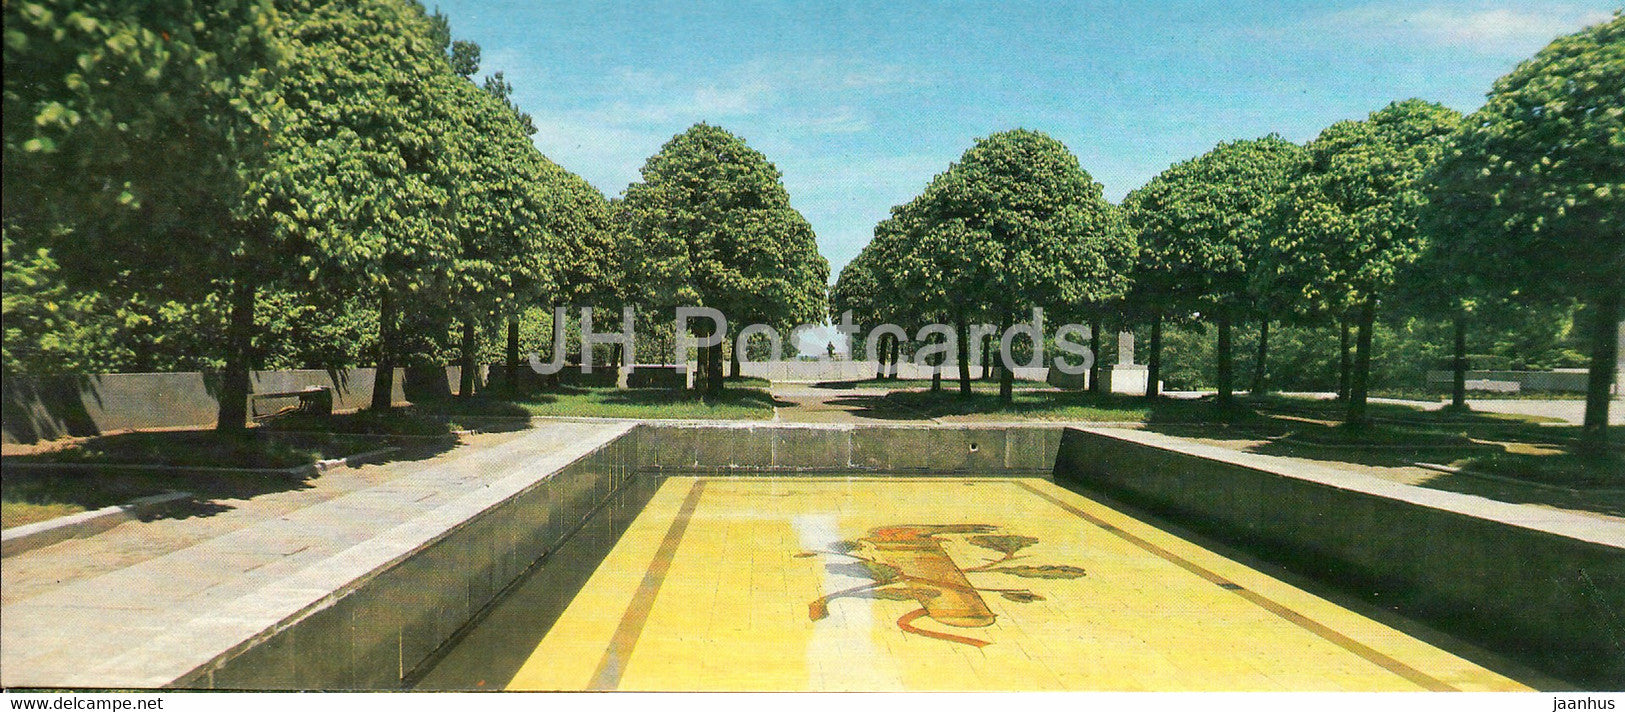 Piskaryovskoye Memorial Cemetery - Memorial Complex - Decorative Pool - 1985 - Russia USSR - unused - JH Postcards